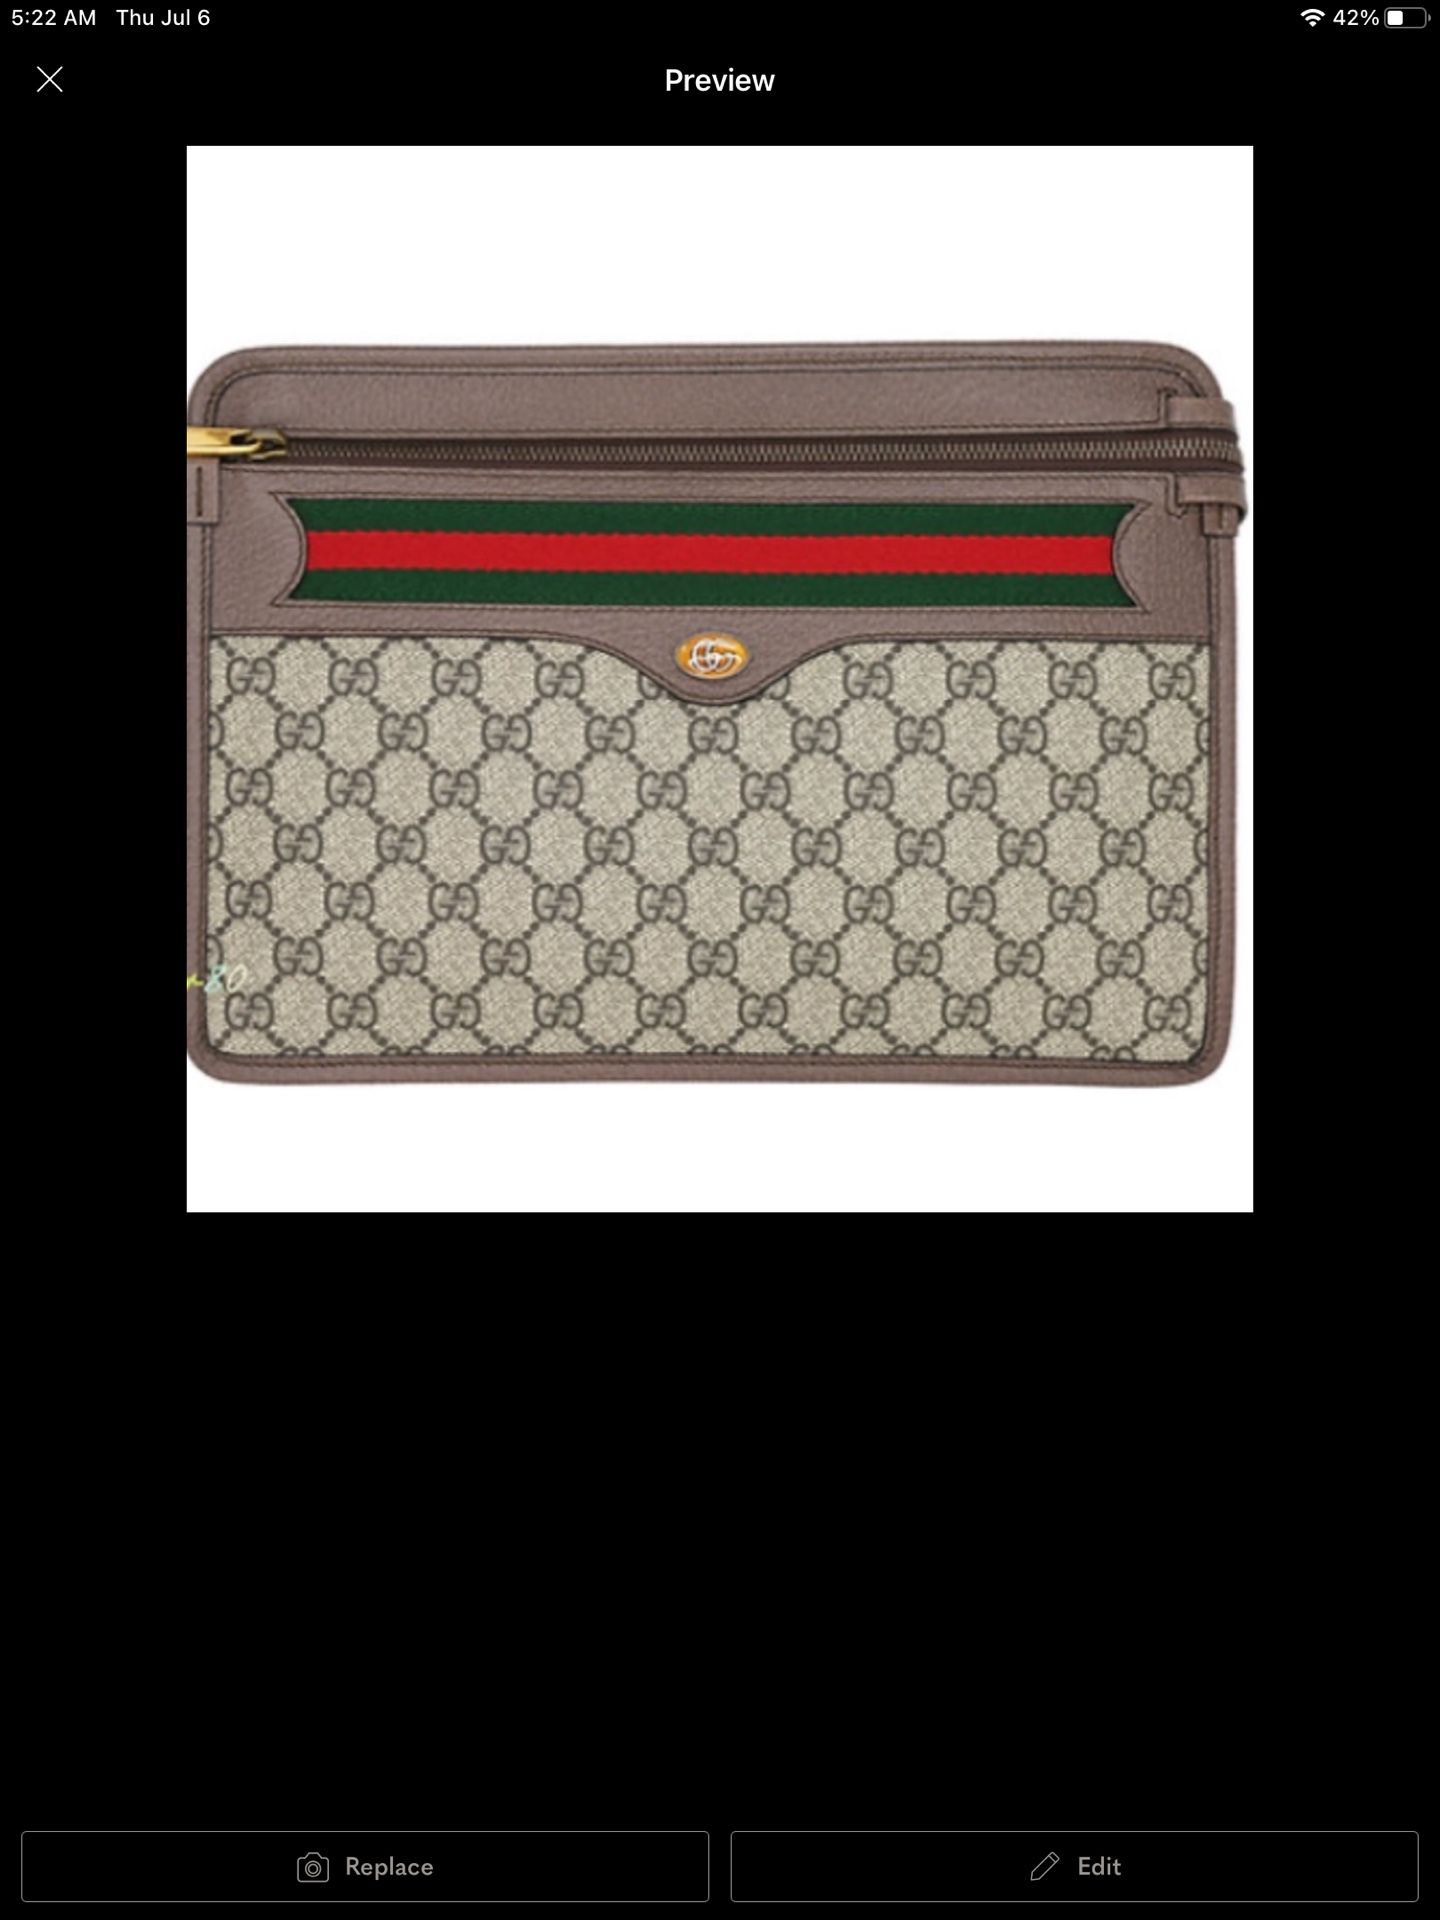 Gucci Ophidia GG Shoulder Bag GG Supreme Canvas Beige/Ebony/Green/Red